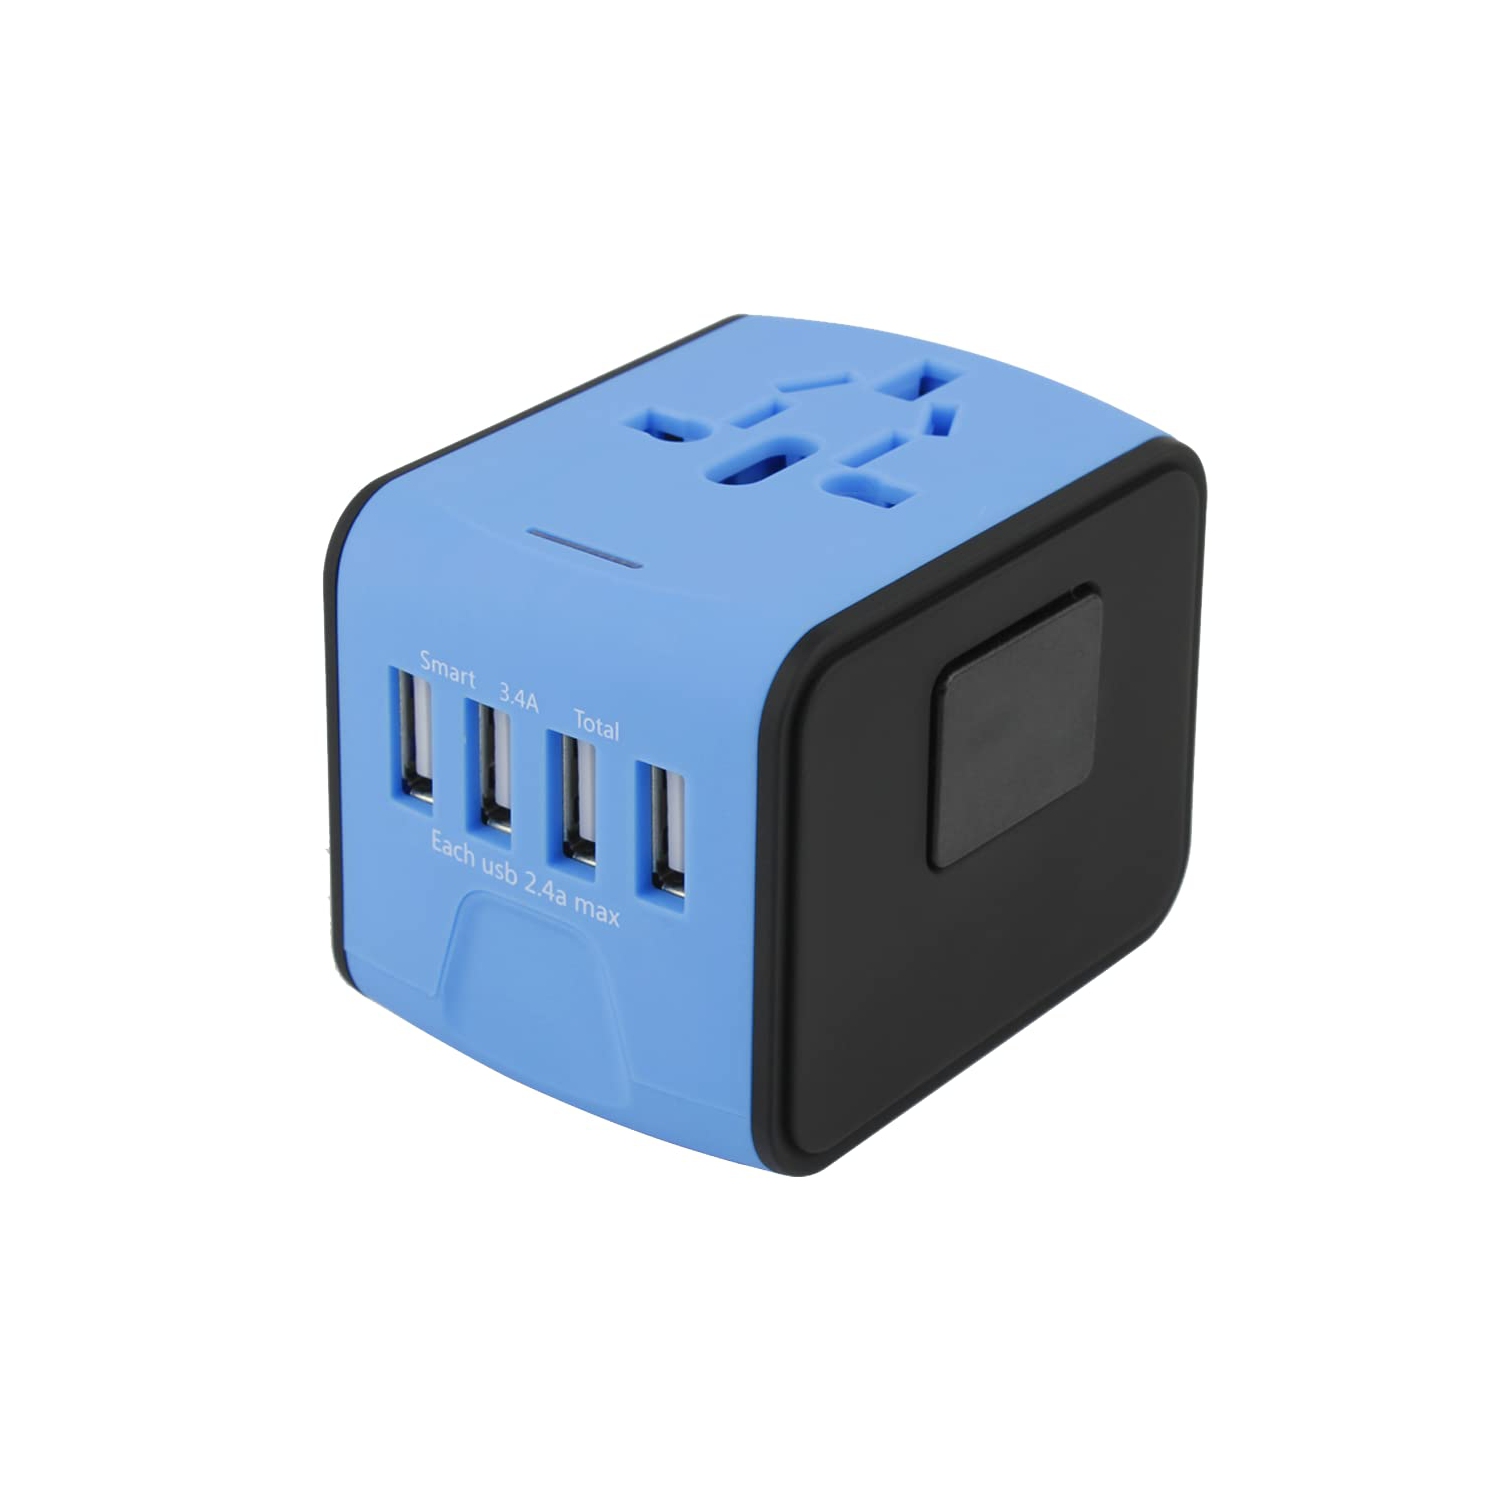 Kenayo Universal 4 USB Ports Travel Adapter/Converter for AU, US, UK, Europe, India & 150+ Countries - Blue